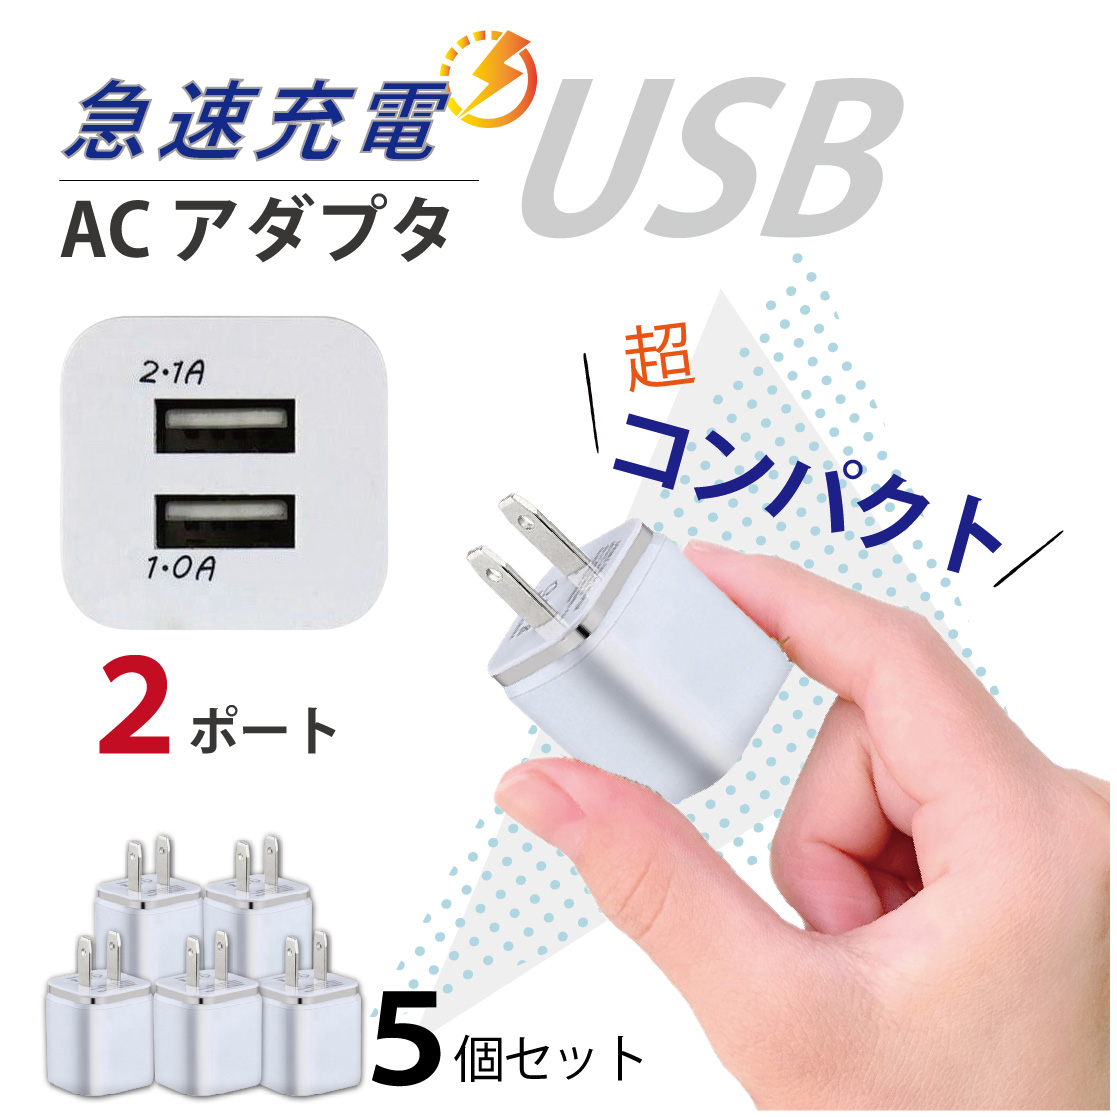 USB コンセント 急速充電器 5個 ACアダプター 2ポート USB iPhone iPad Android MacBook タブレット 送料無料